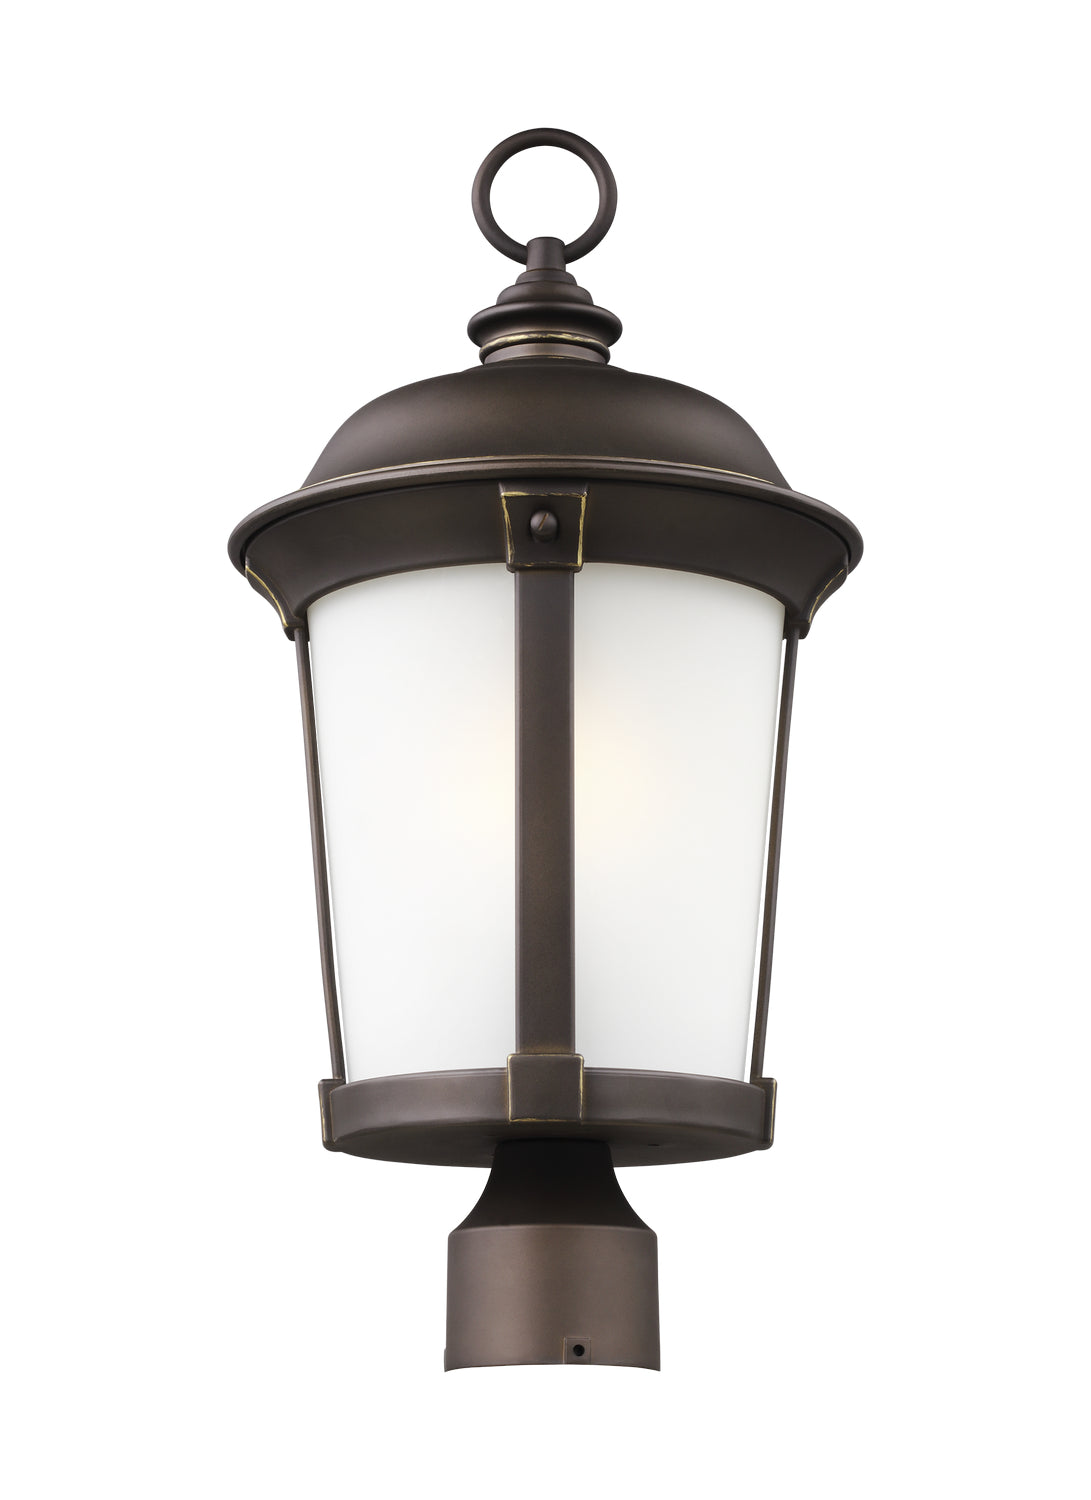 Generation Lighting Canada. - One Light Outdoor Post Lantern - Calder - Antique Bronze- Union Lighting Luminaires Decor